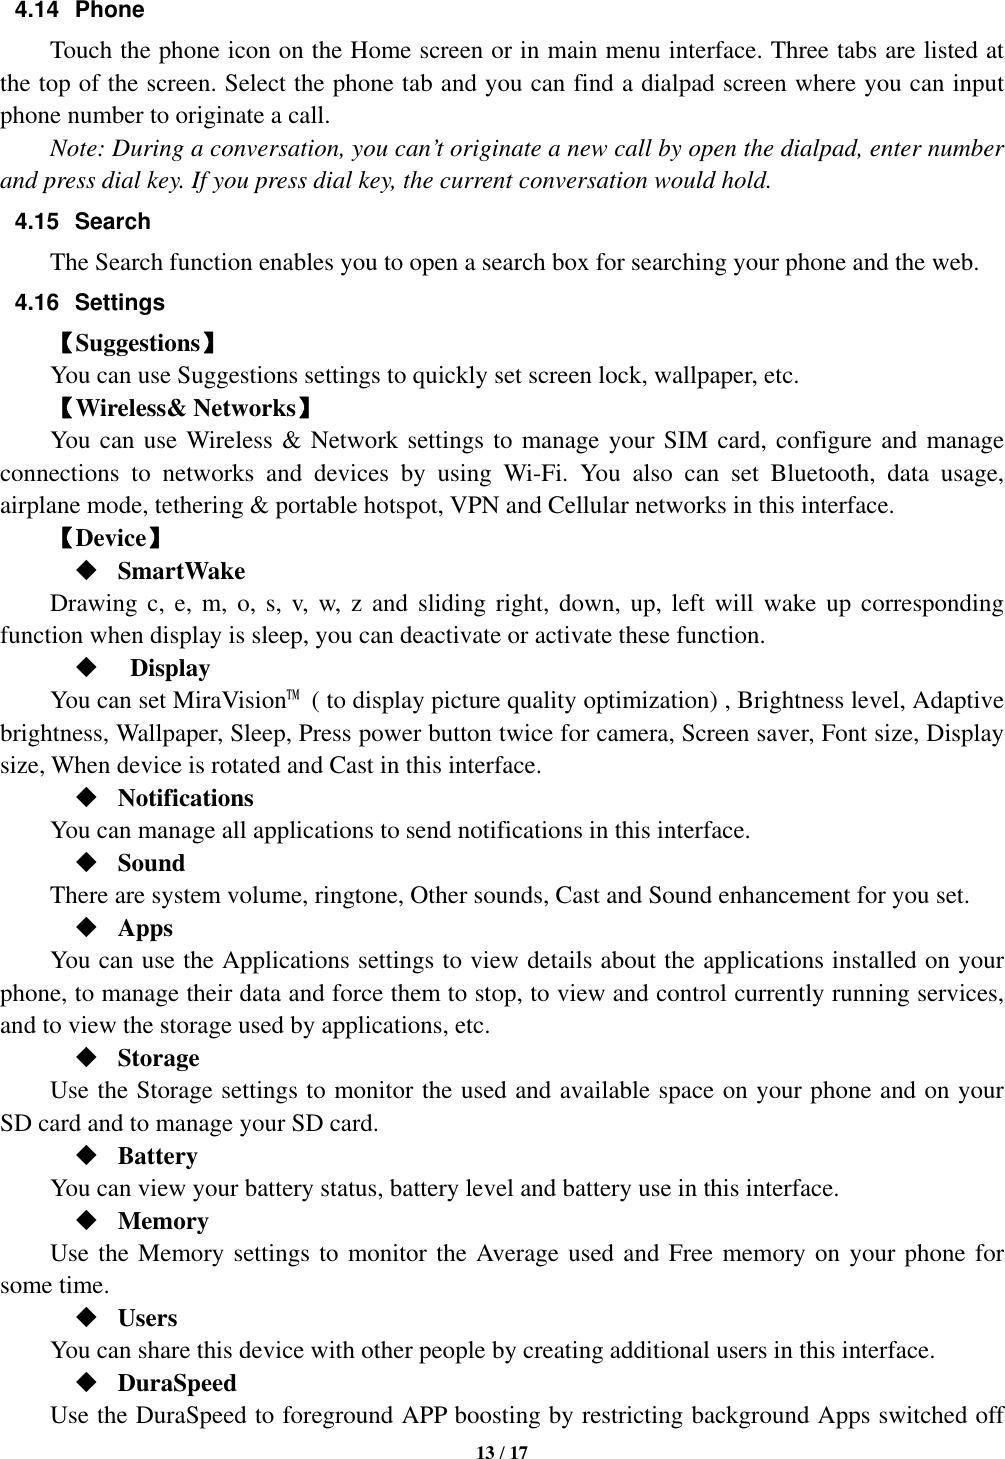 Page 13 of Sky Phone SKYELITEA55 4G Smart Phone User Manual